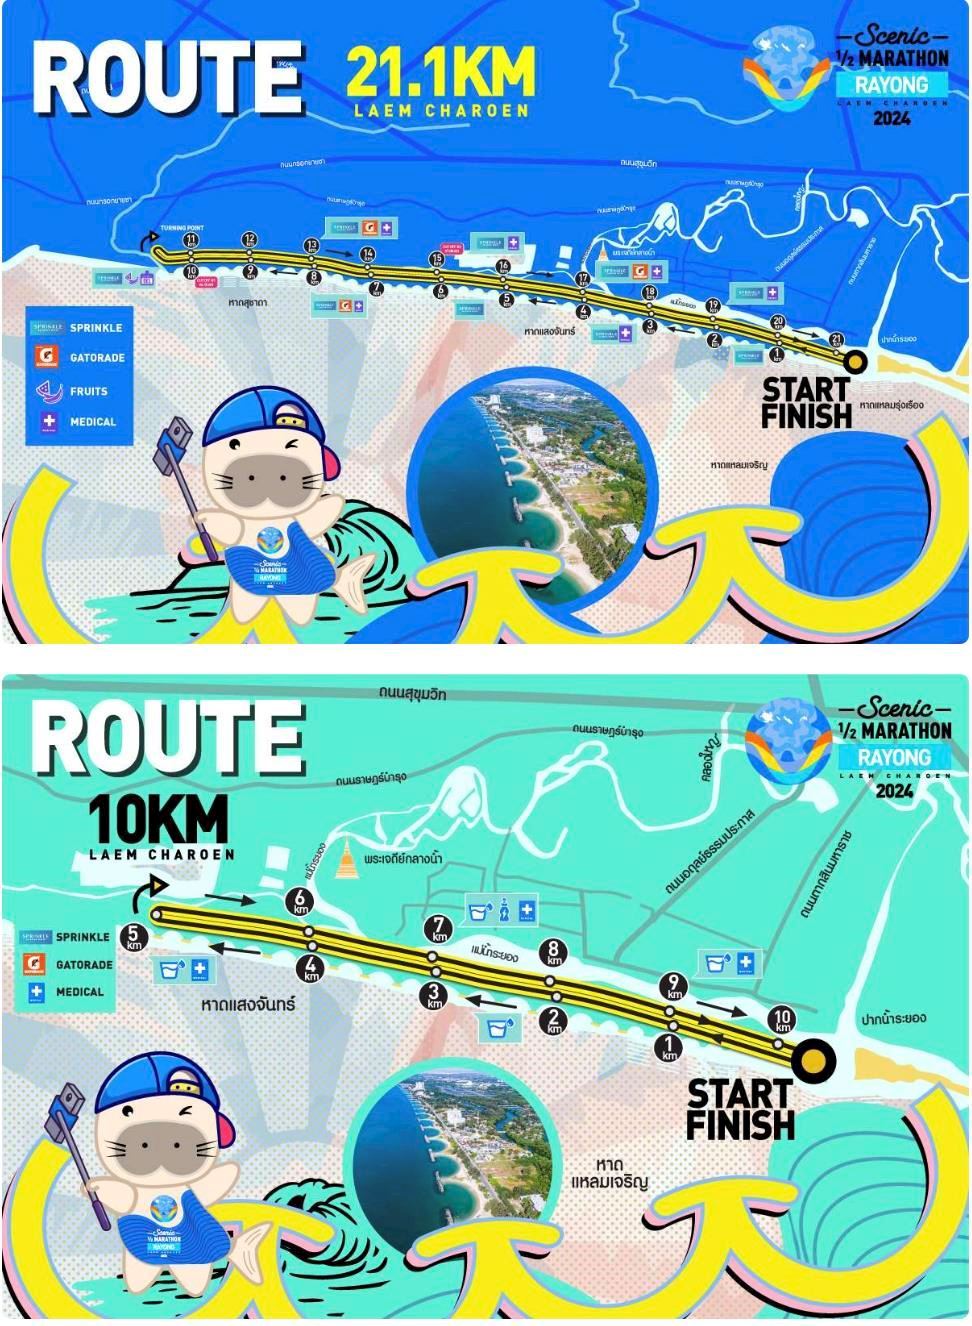 Scenic Half Marathon Rayong Routenkarte